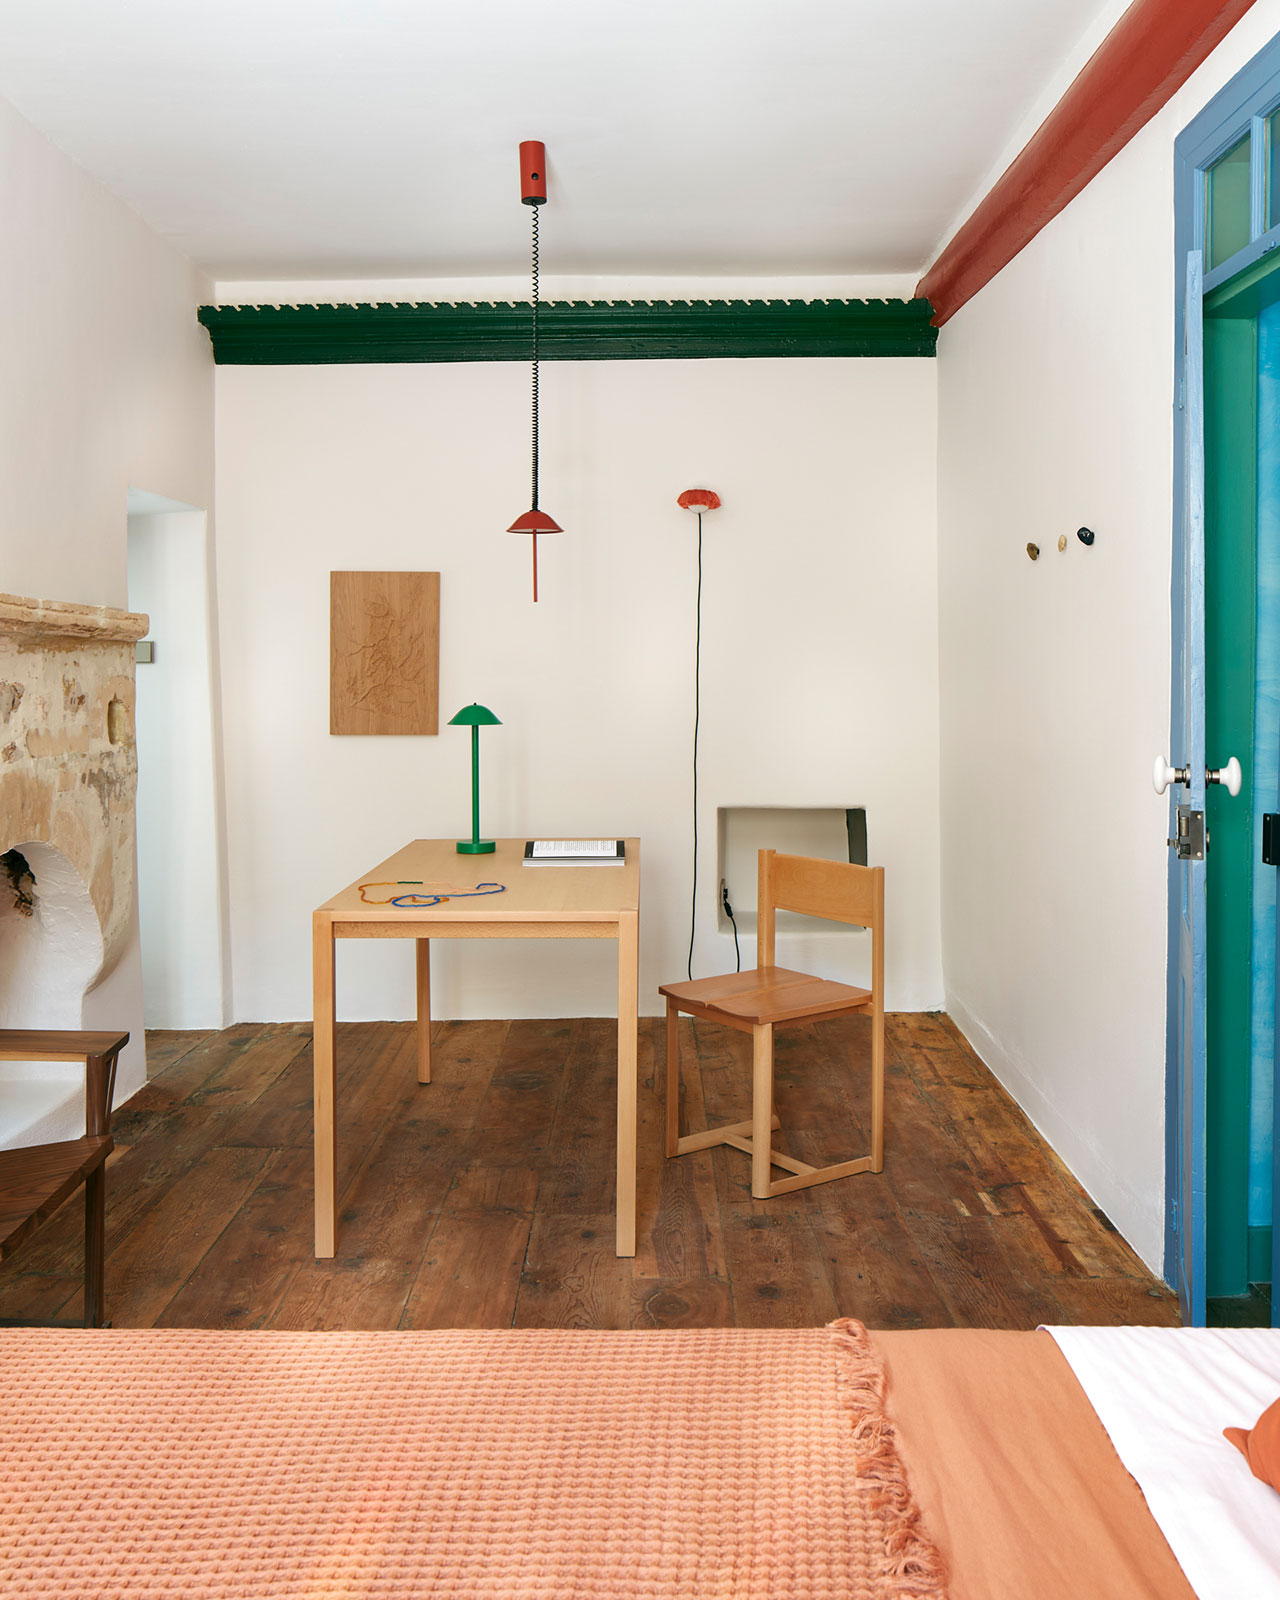 4Rooms Kastellorizo. Interior design project for La Società delle Api residency program. Room designed by Studio Brynjar &amp; Veronika. Photography by Depasquale+Maffini.